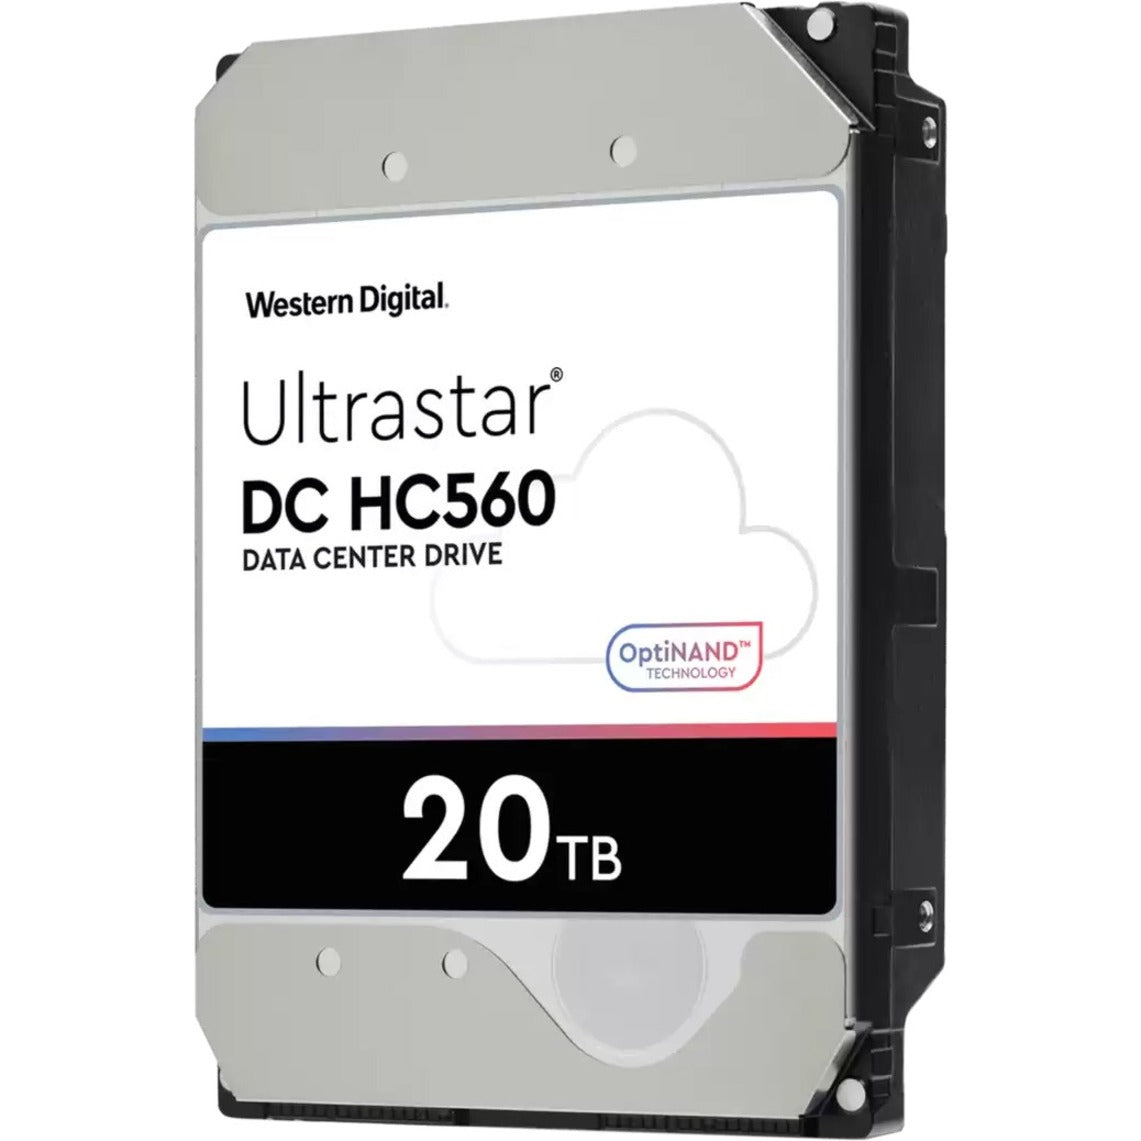 WD Ultrastar DC HC560 20 TB Hard Drive - 3.5" Internal - SATA - CMR Method [Discontinued]